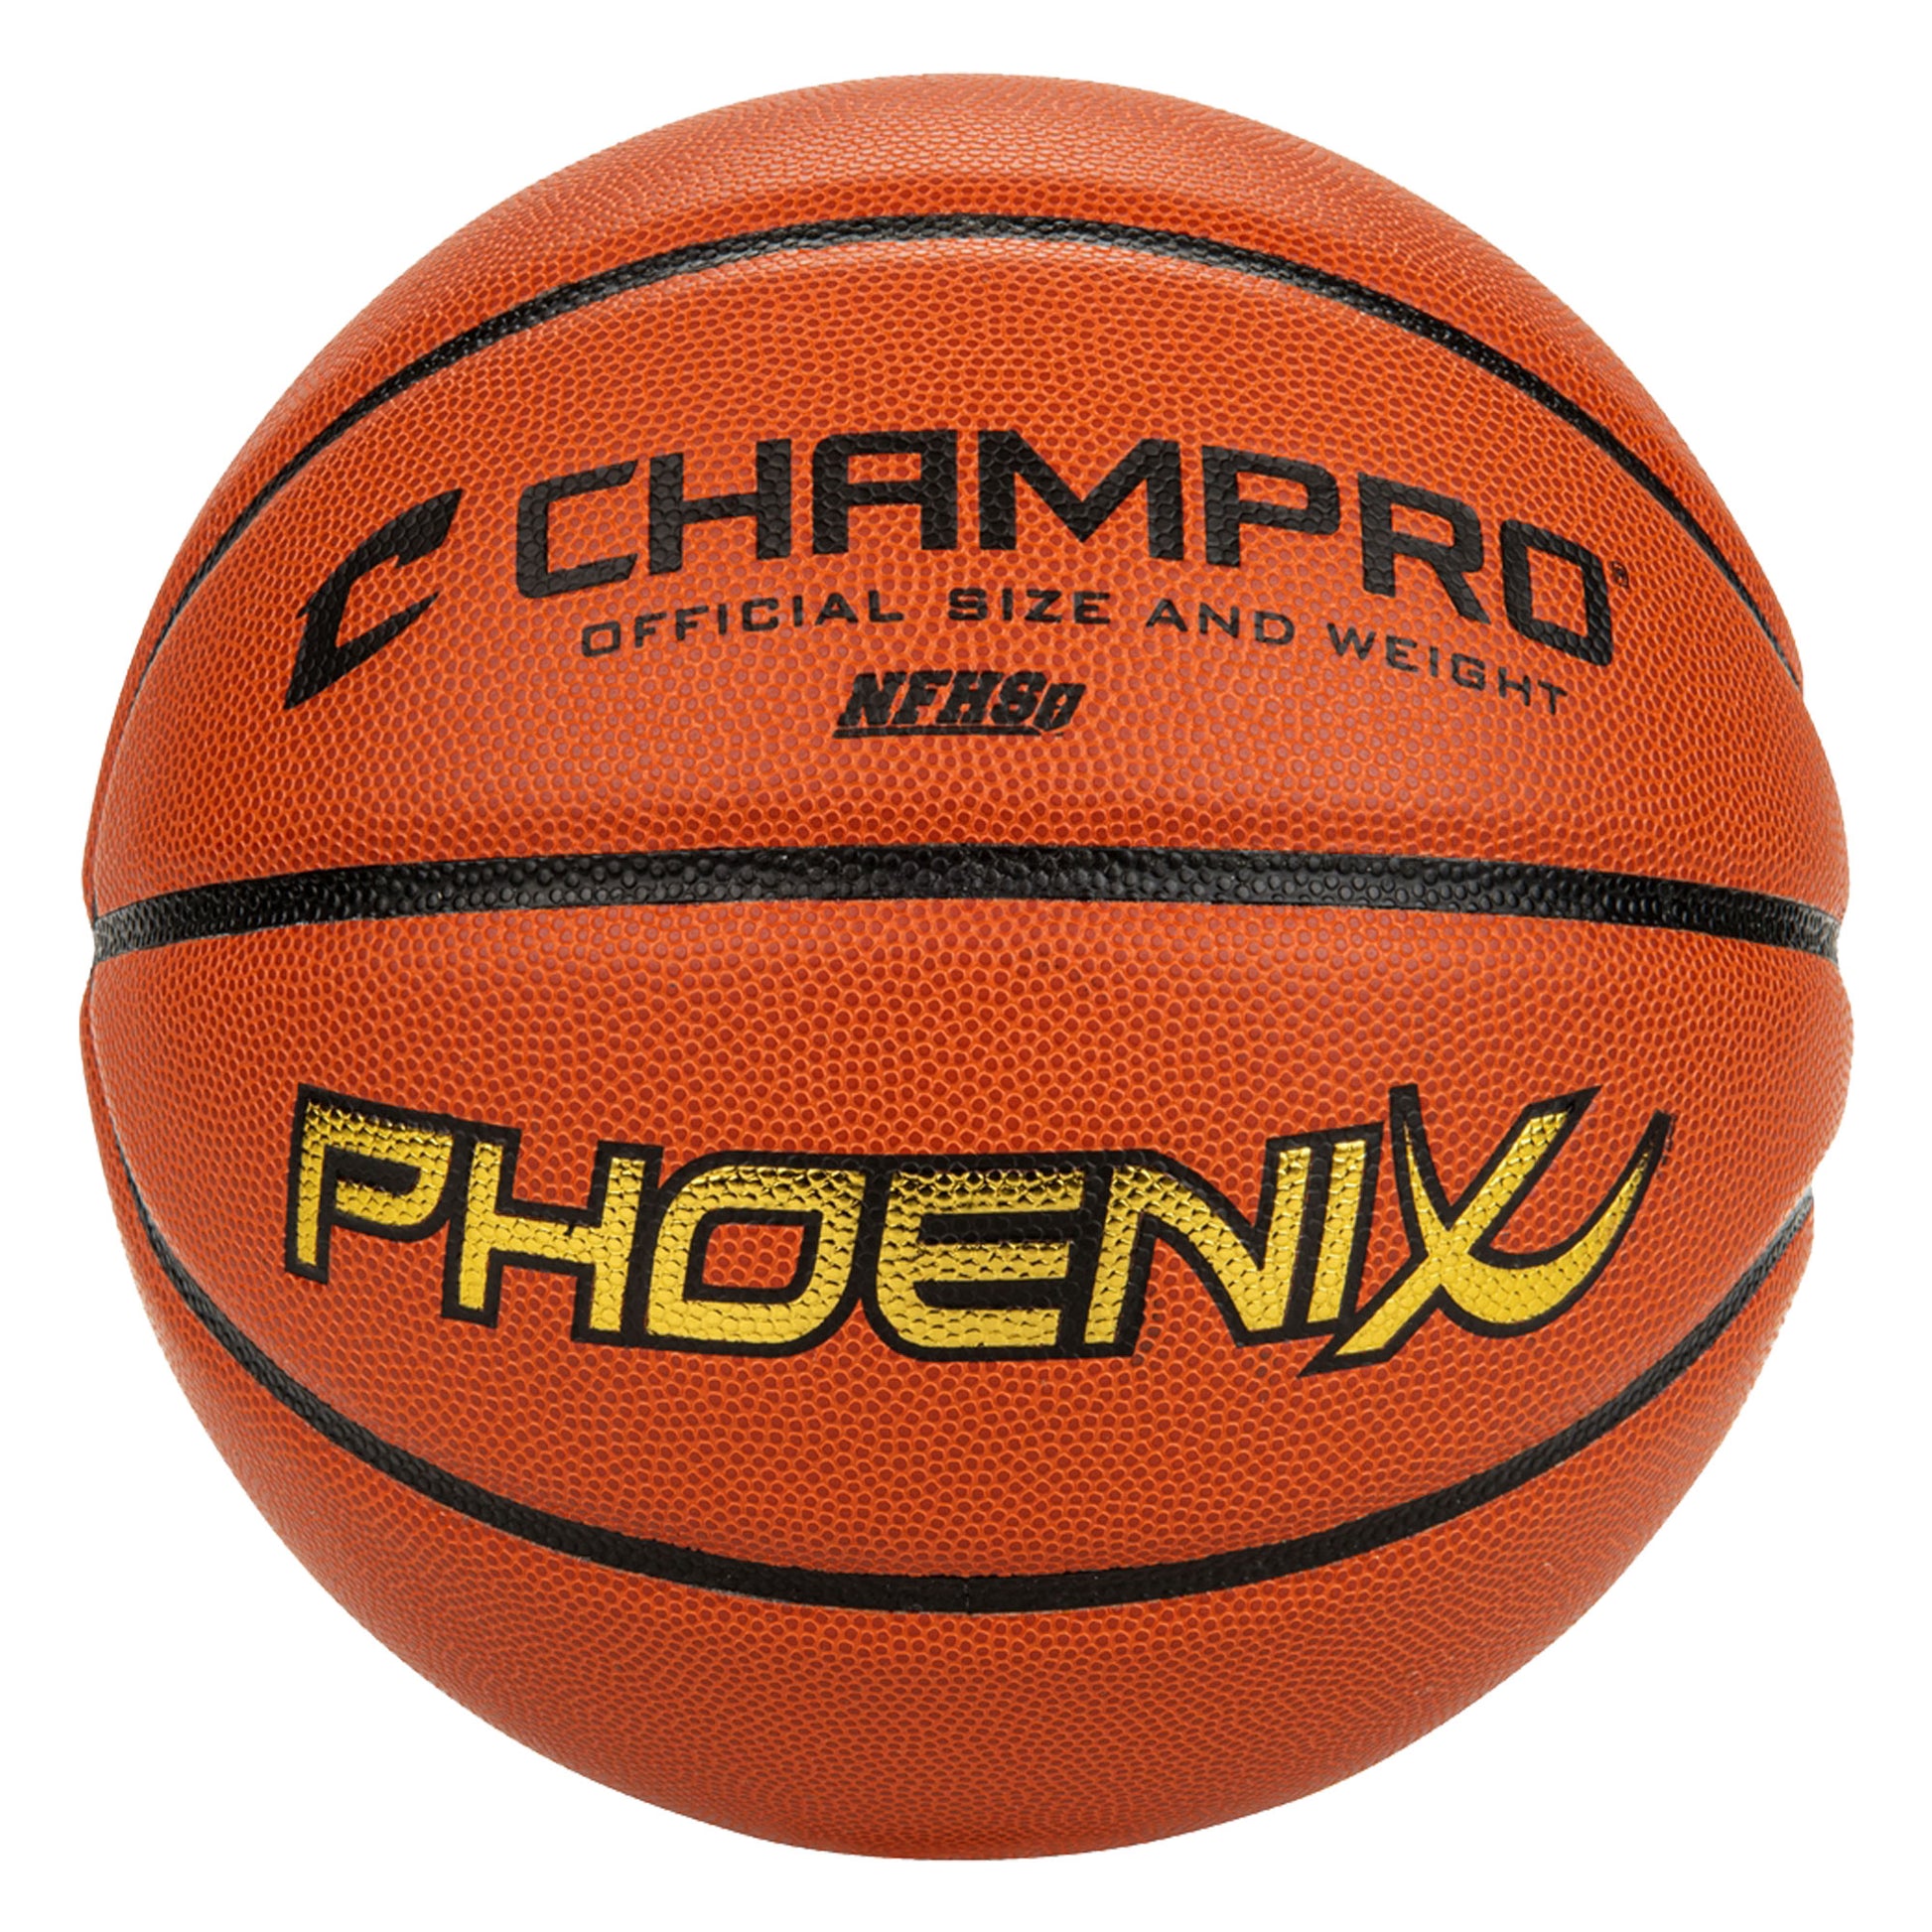 Champro Sports Phoenix Microfiber Indoor Basketball